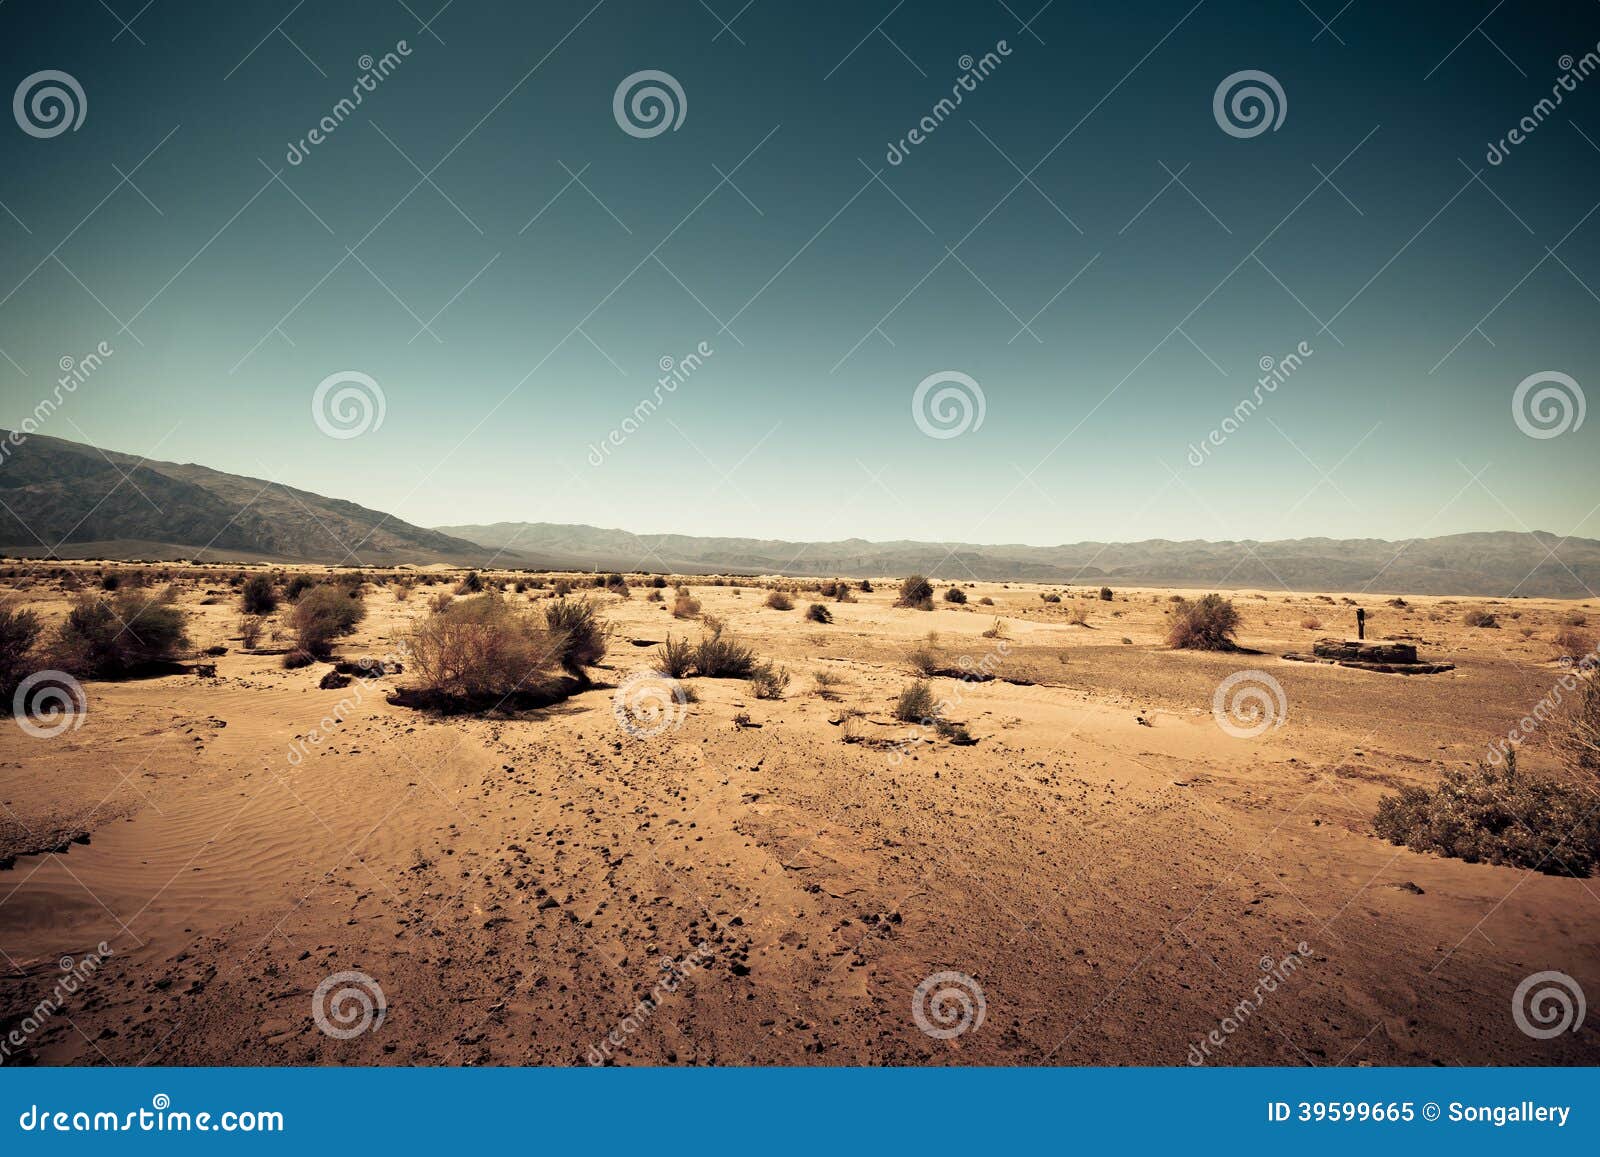 barren land like mars